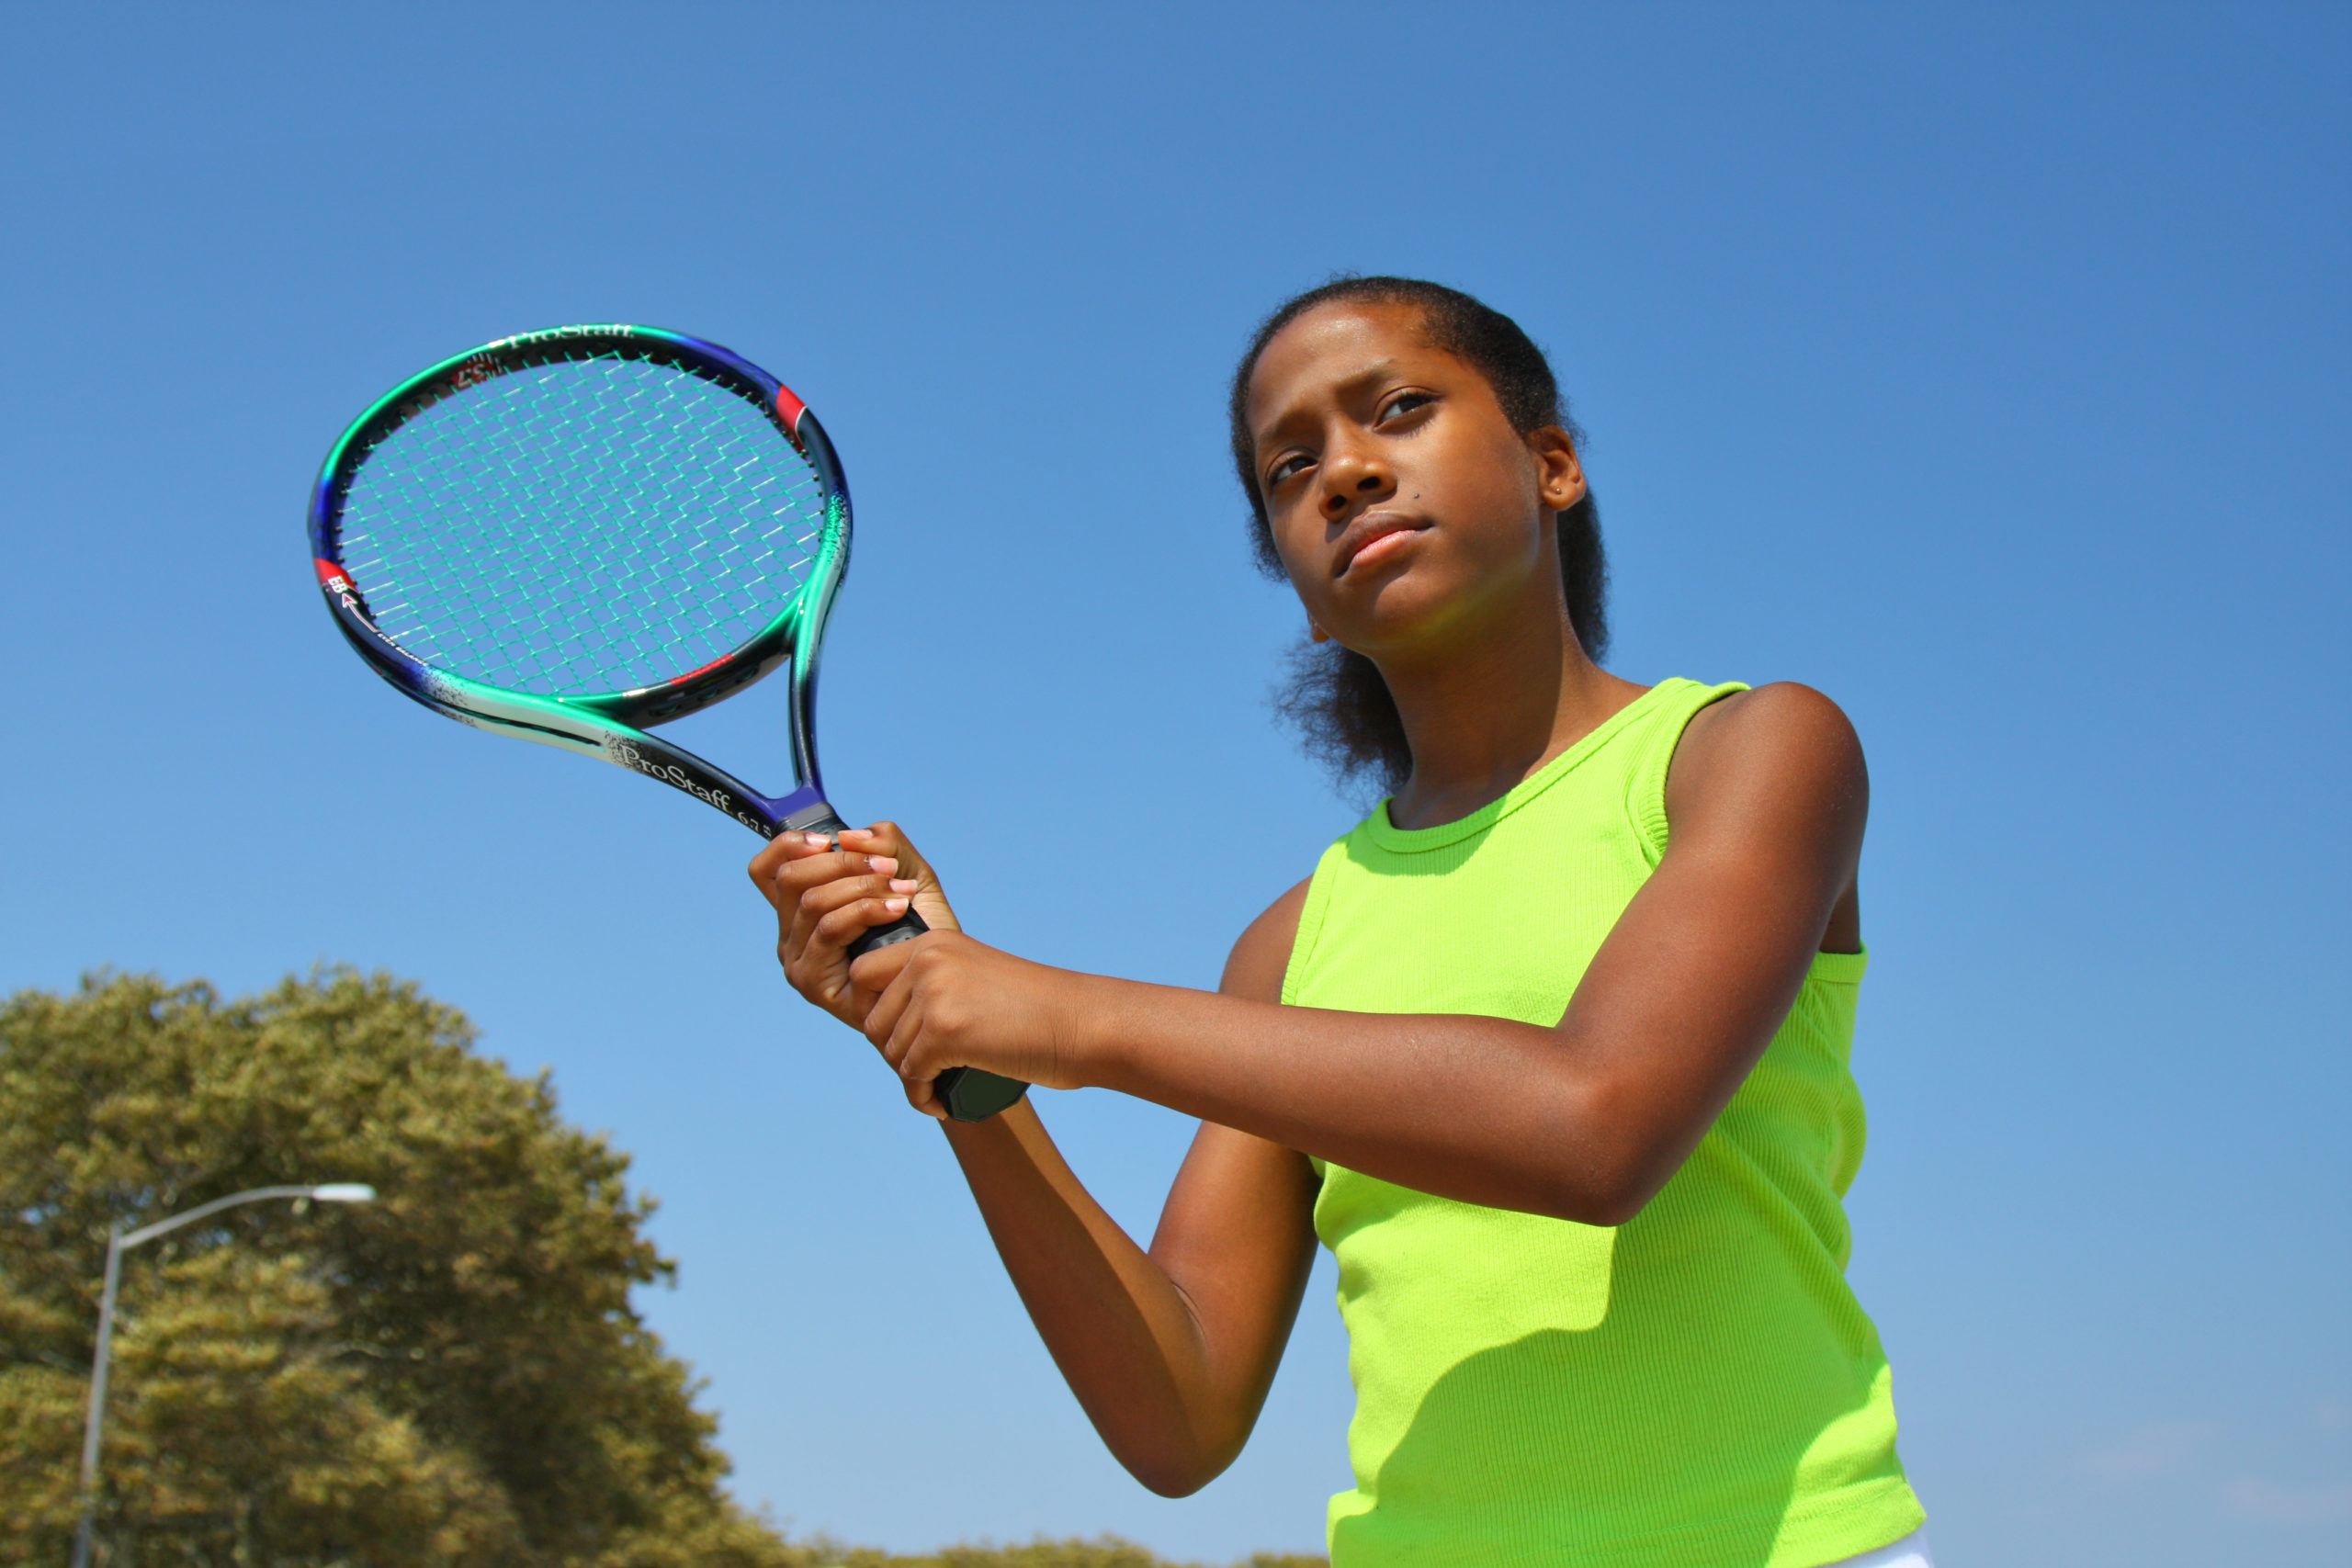 13 year old girl playing tennis